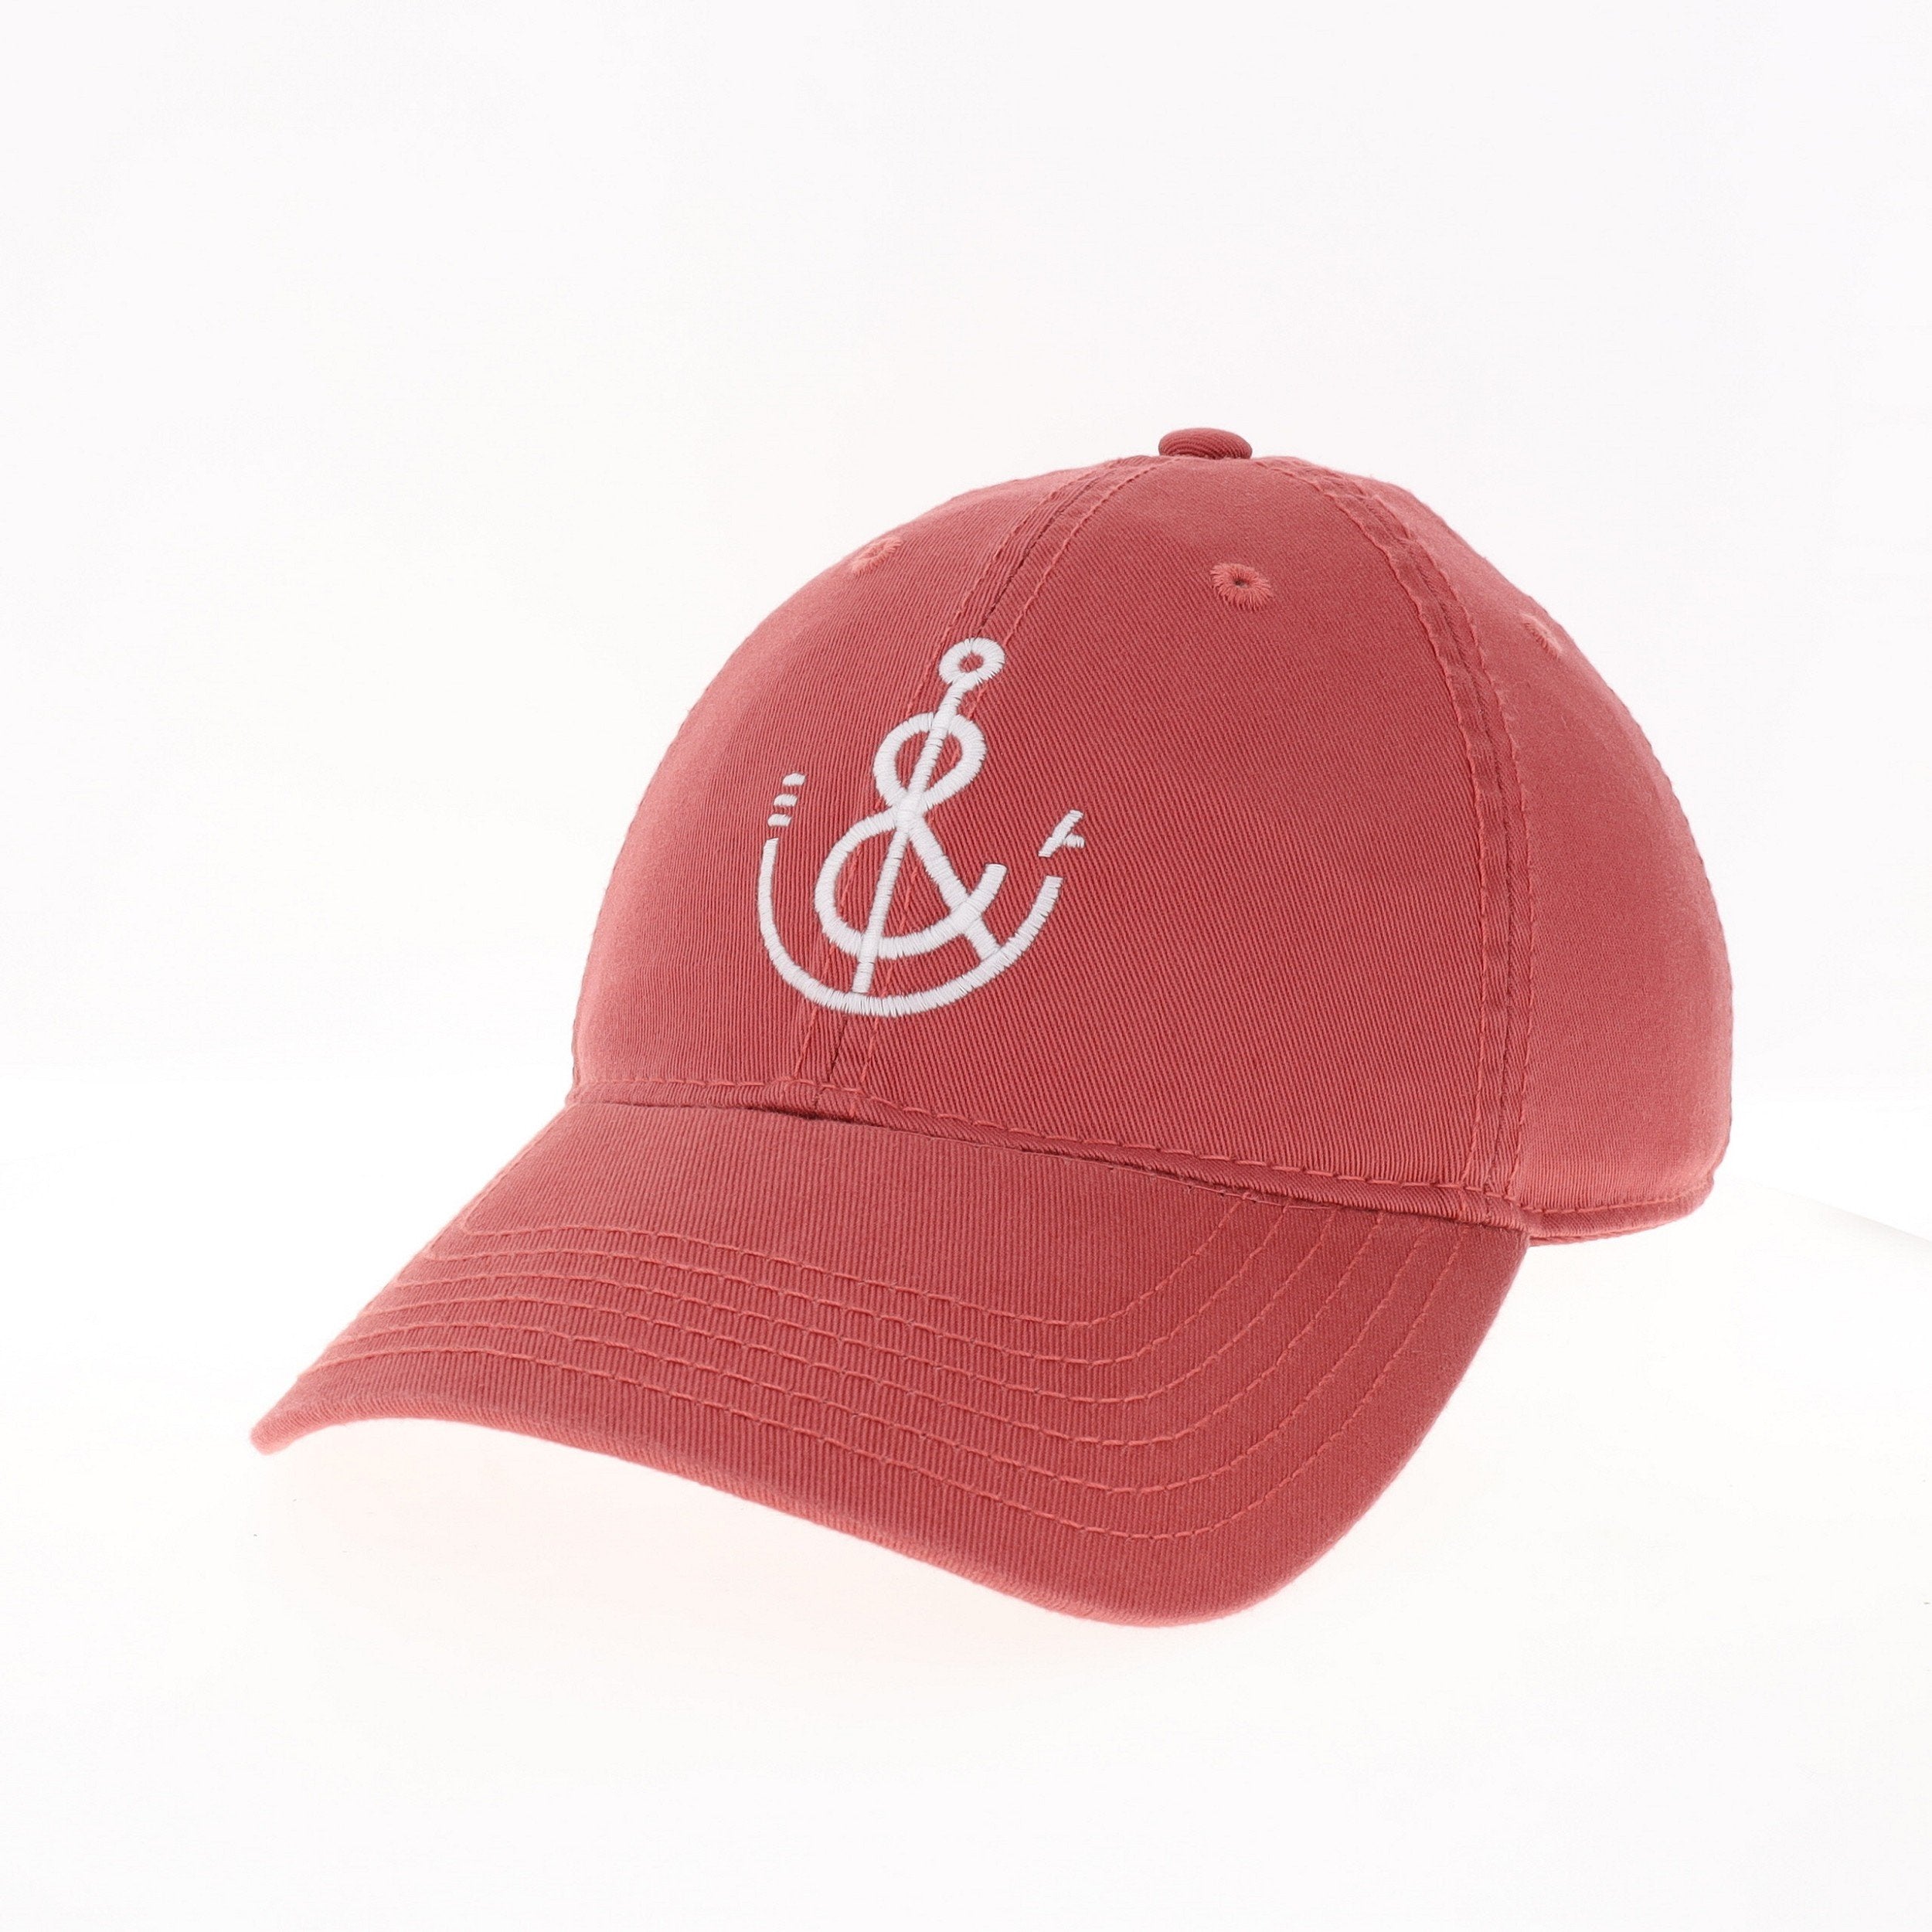 Signature Anchor Baseball Hat